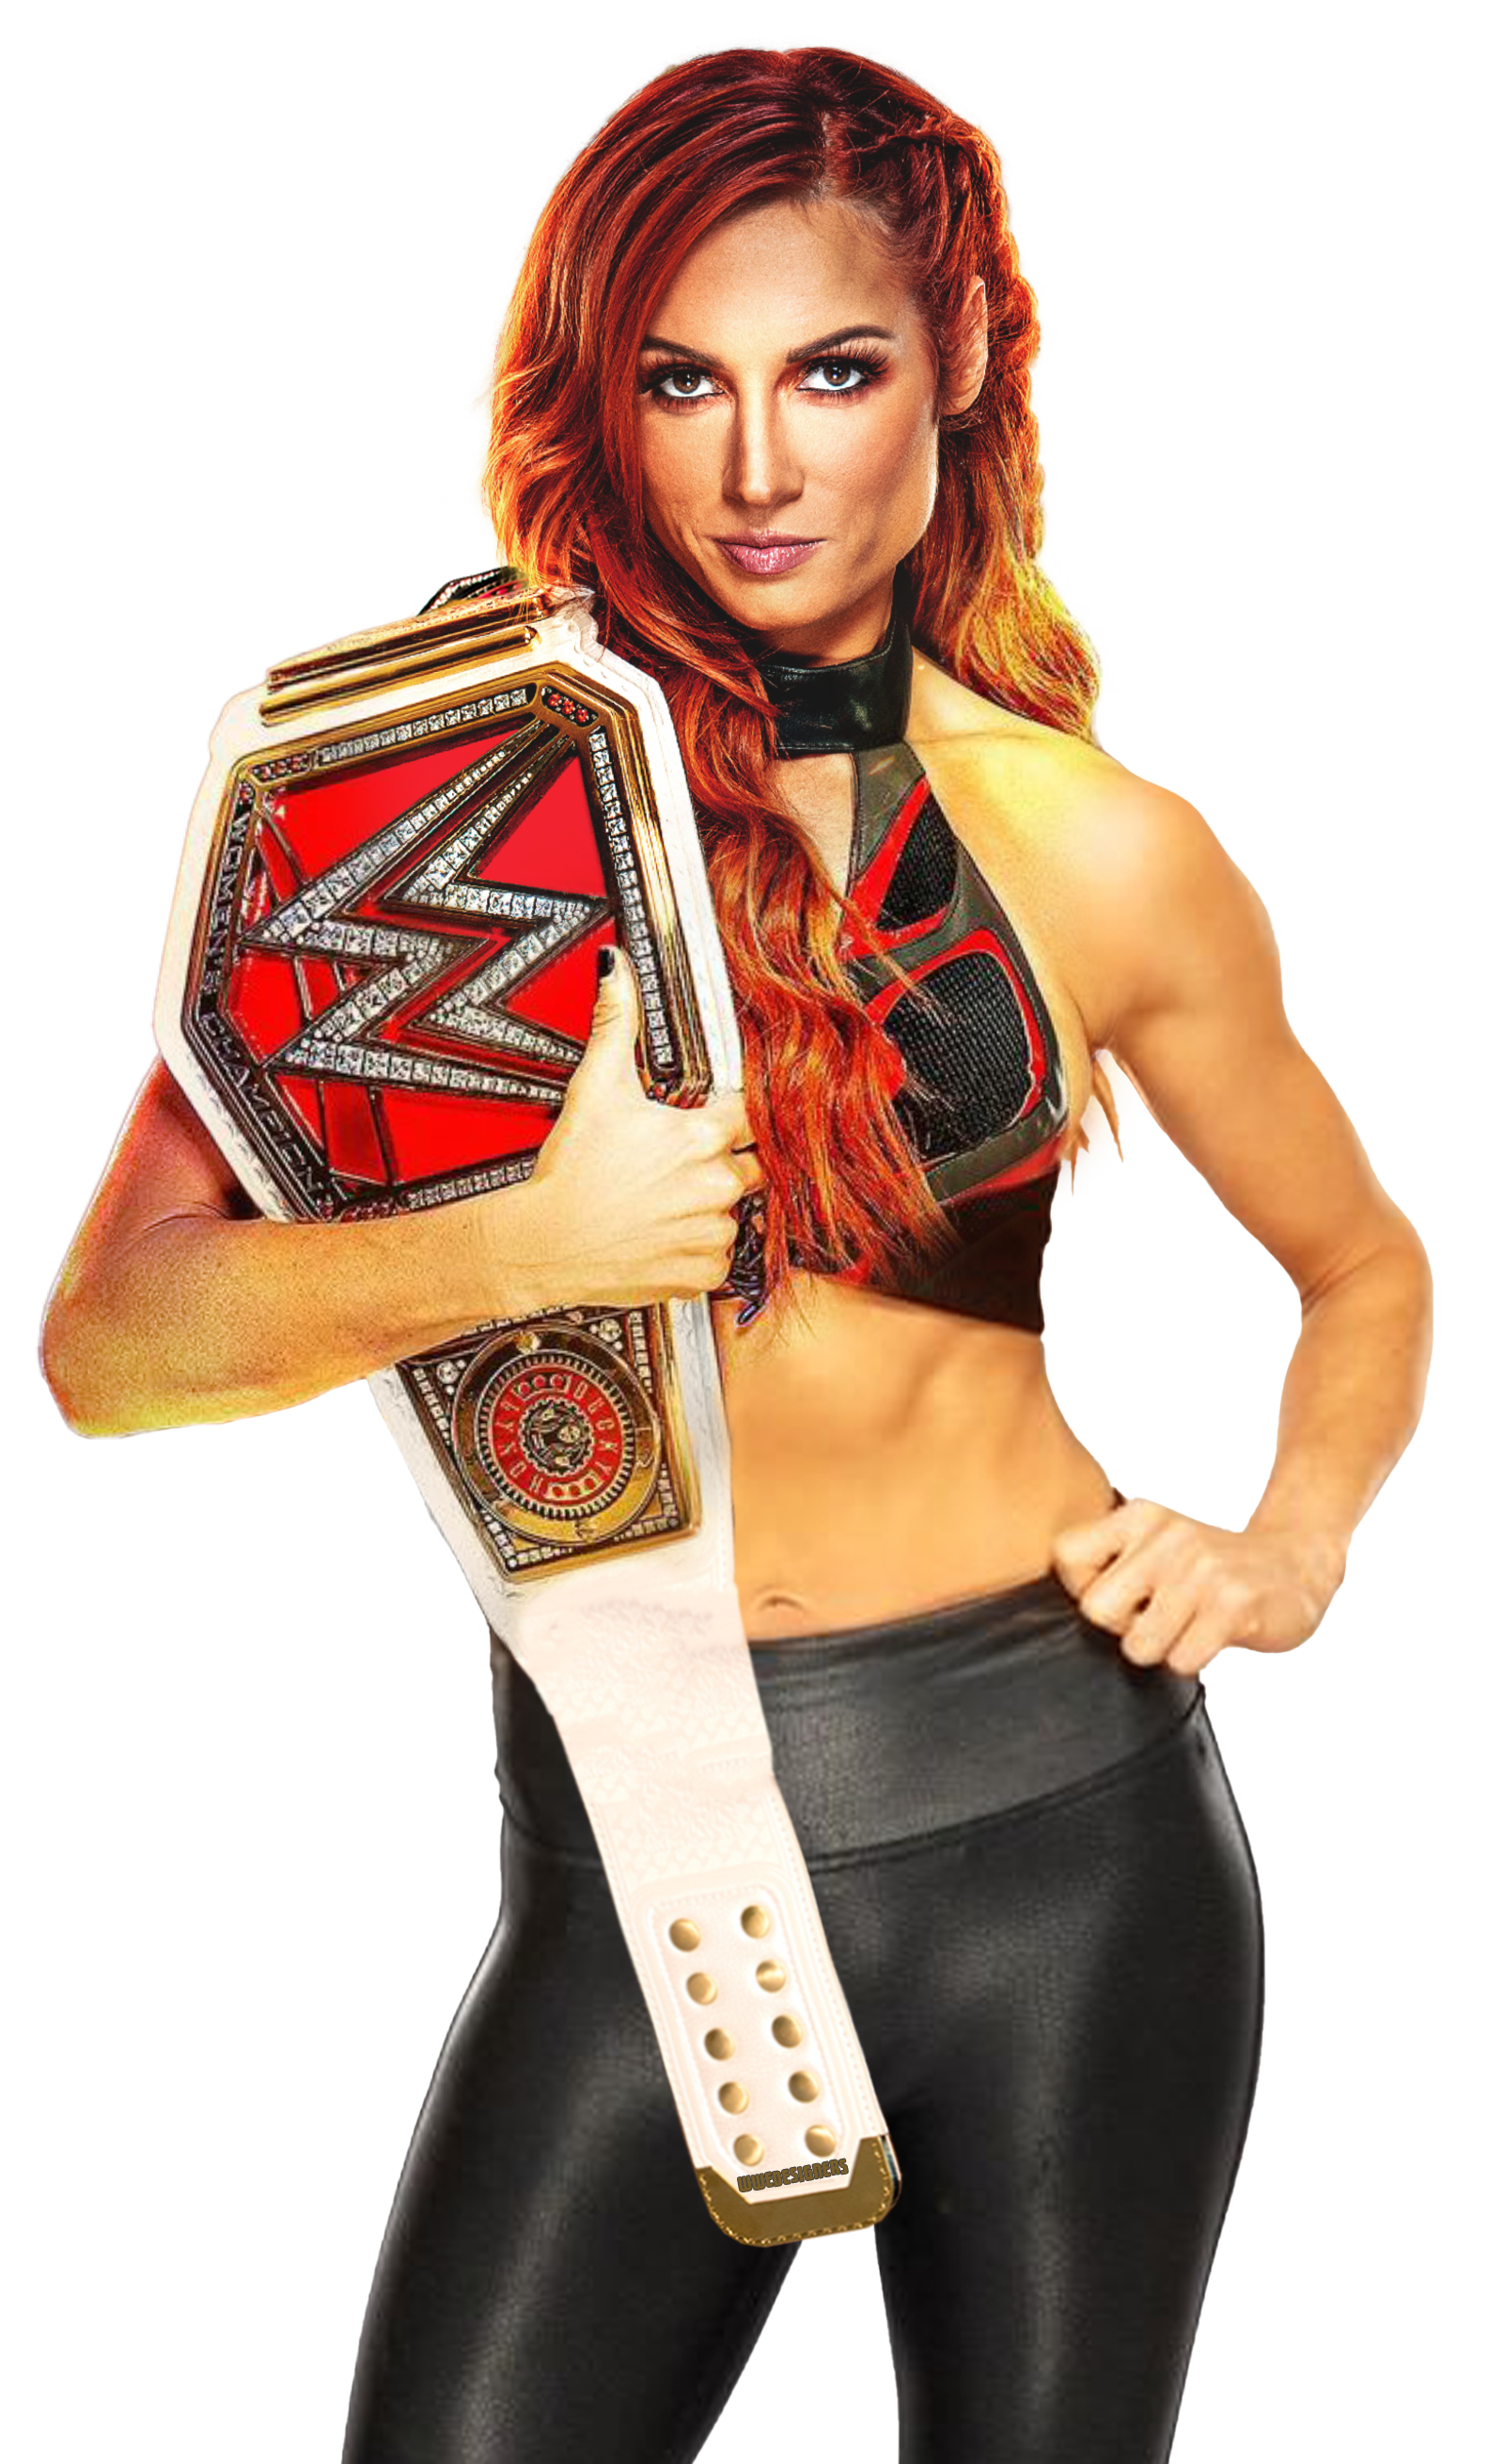 BeckyLynch.net  Fansite for WWE's Becky Lynch! (@BeckyLynchNet) / X